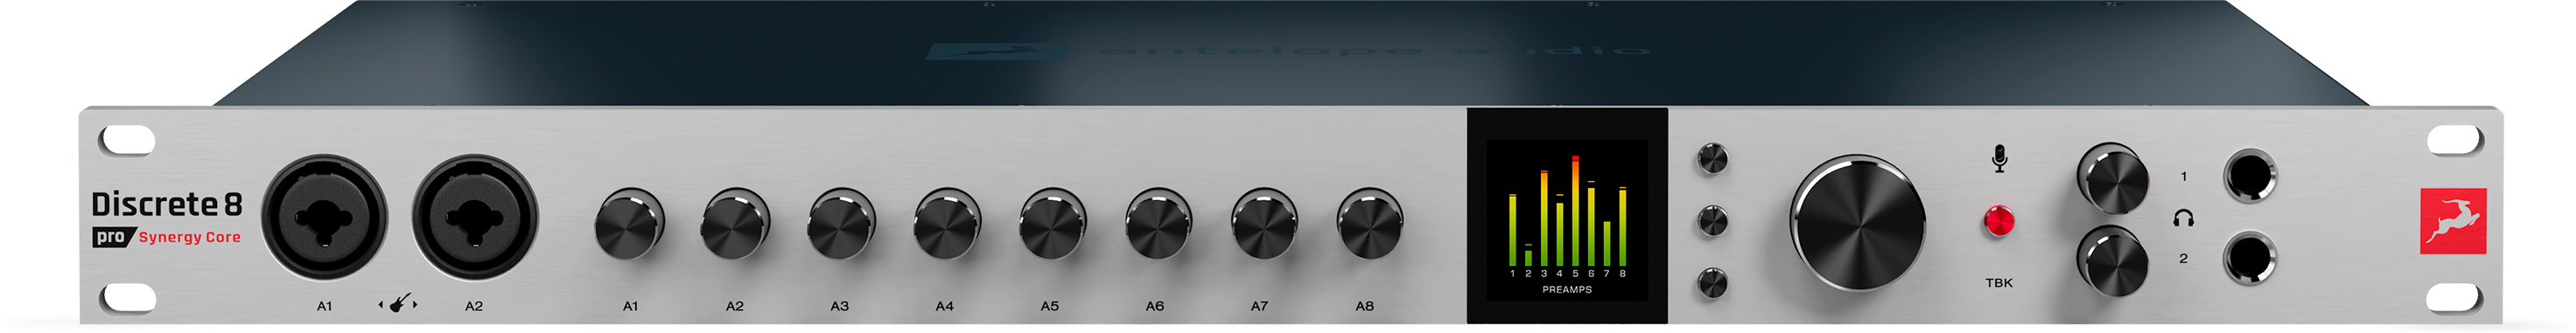 Antelope Audio Discrete 8 Pro Synergy Core - Carte Son Thunderbolt - Main picture